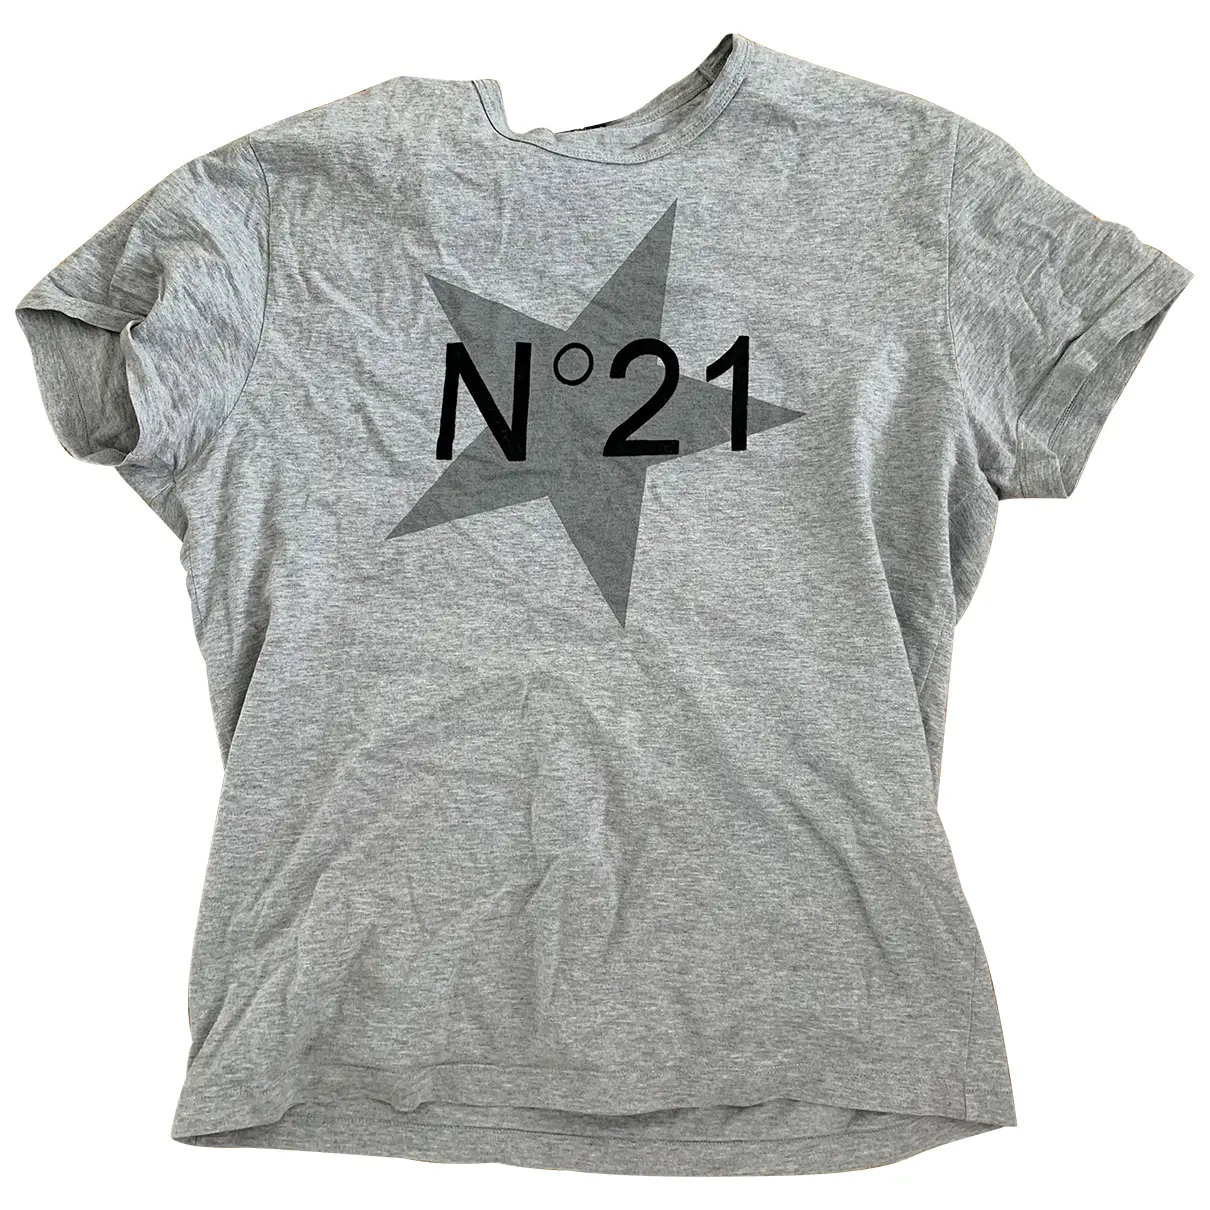 T-shirt N°21